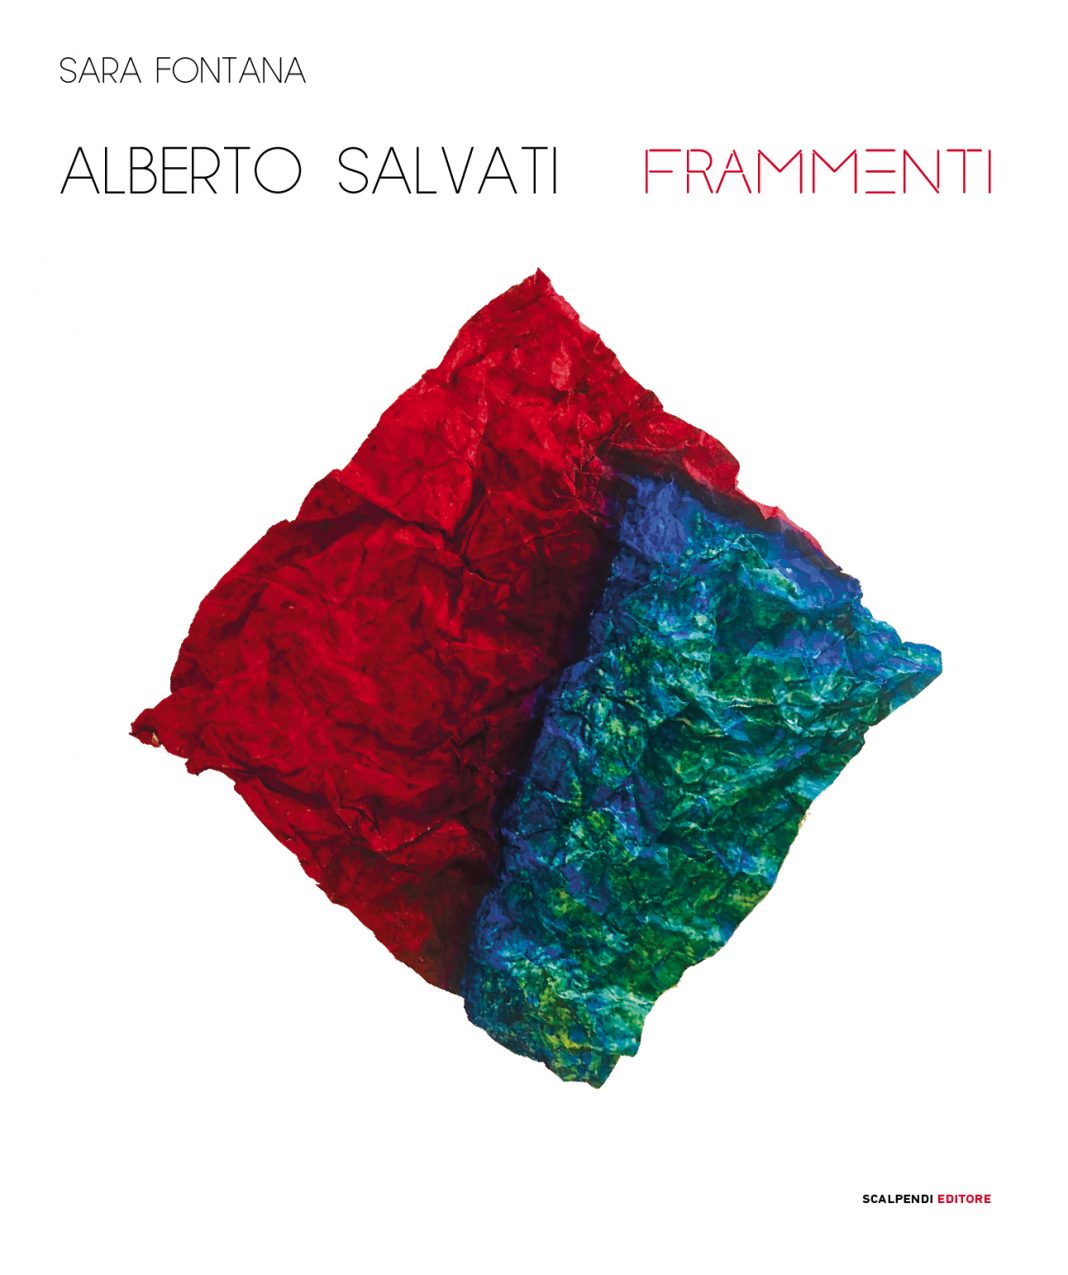 Alberto Salvati  – Frammentihttps://www.exibart.com/repository/media/formidable/11/COPERTINA_SALVATI_DEF-1068x1275.jpg